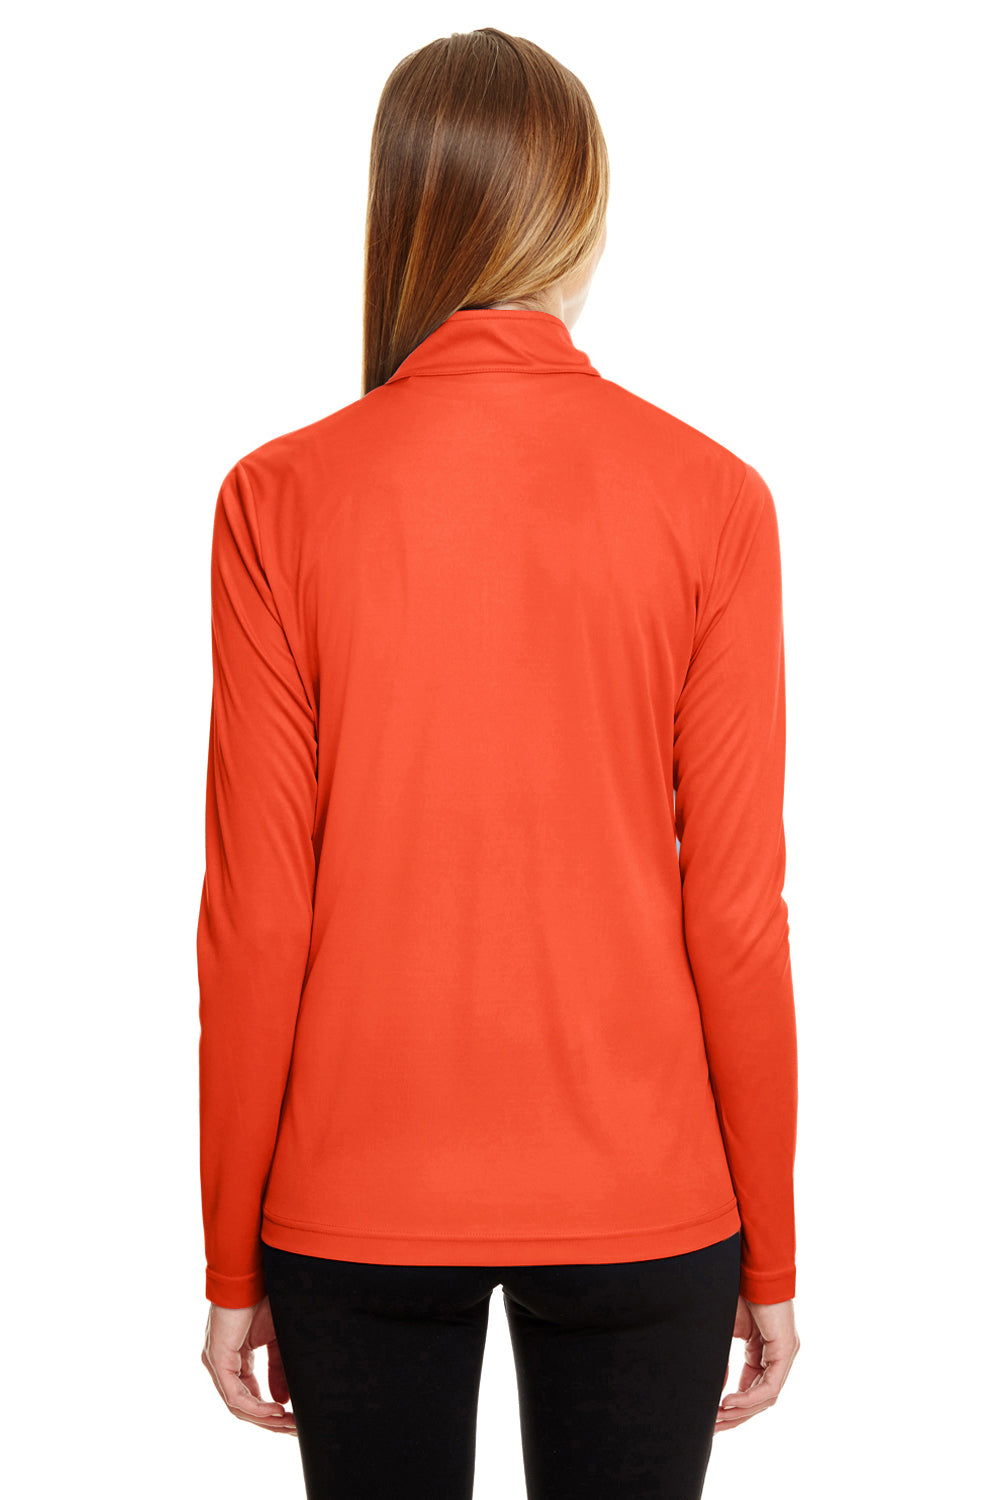 Team 365 TT31W Womens Zone Performance Moisture Wicking 1/4 Zip Sweatshirt Orange Back